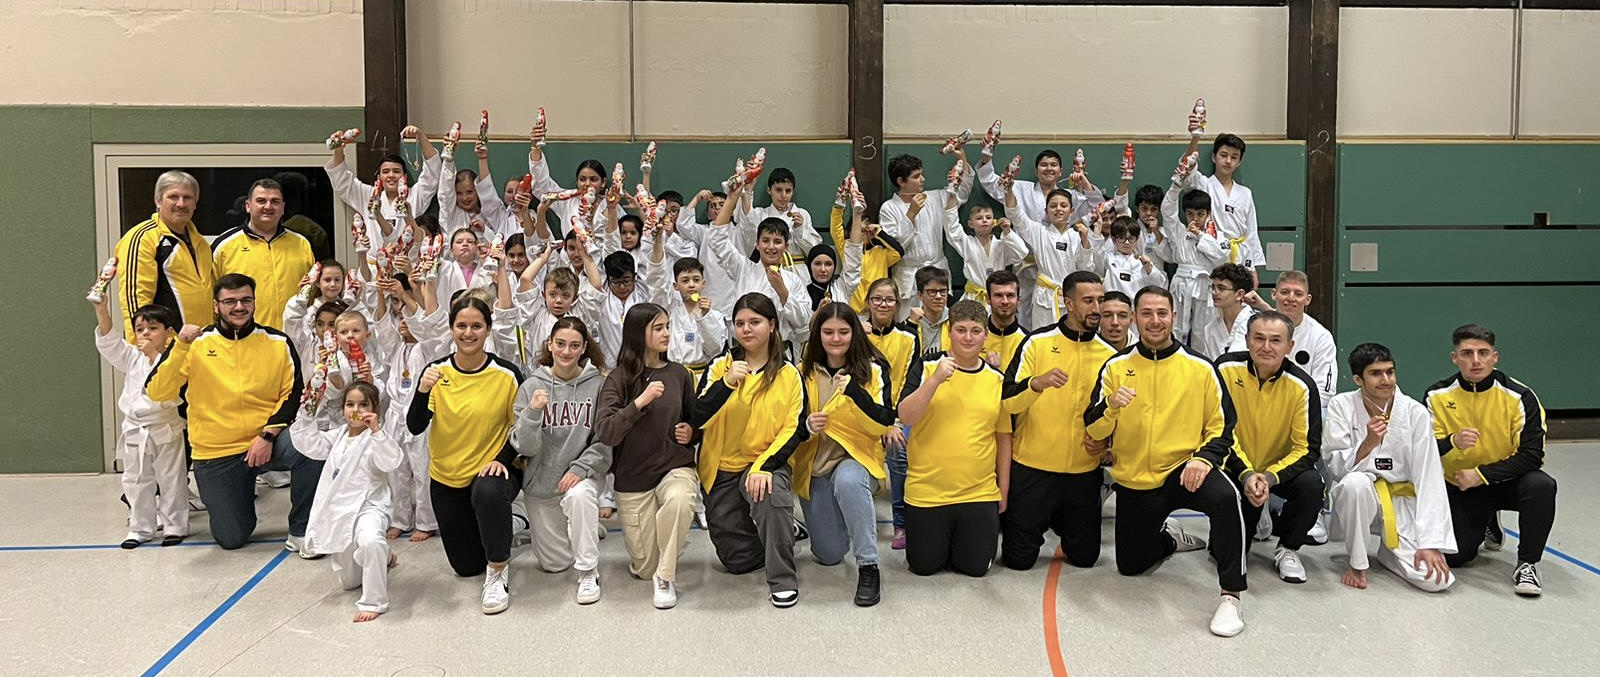 FTC Kumgang - Ein erfolgreicher Taekwondo-Verein